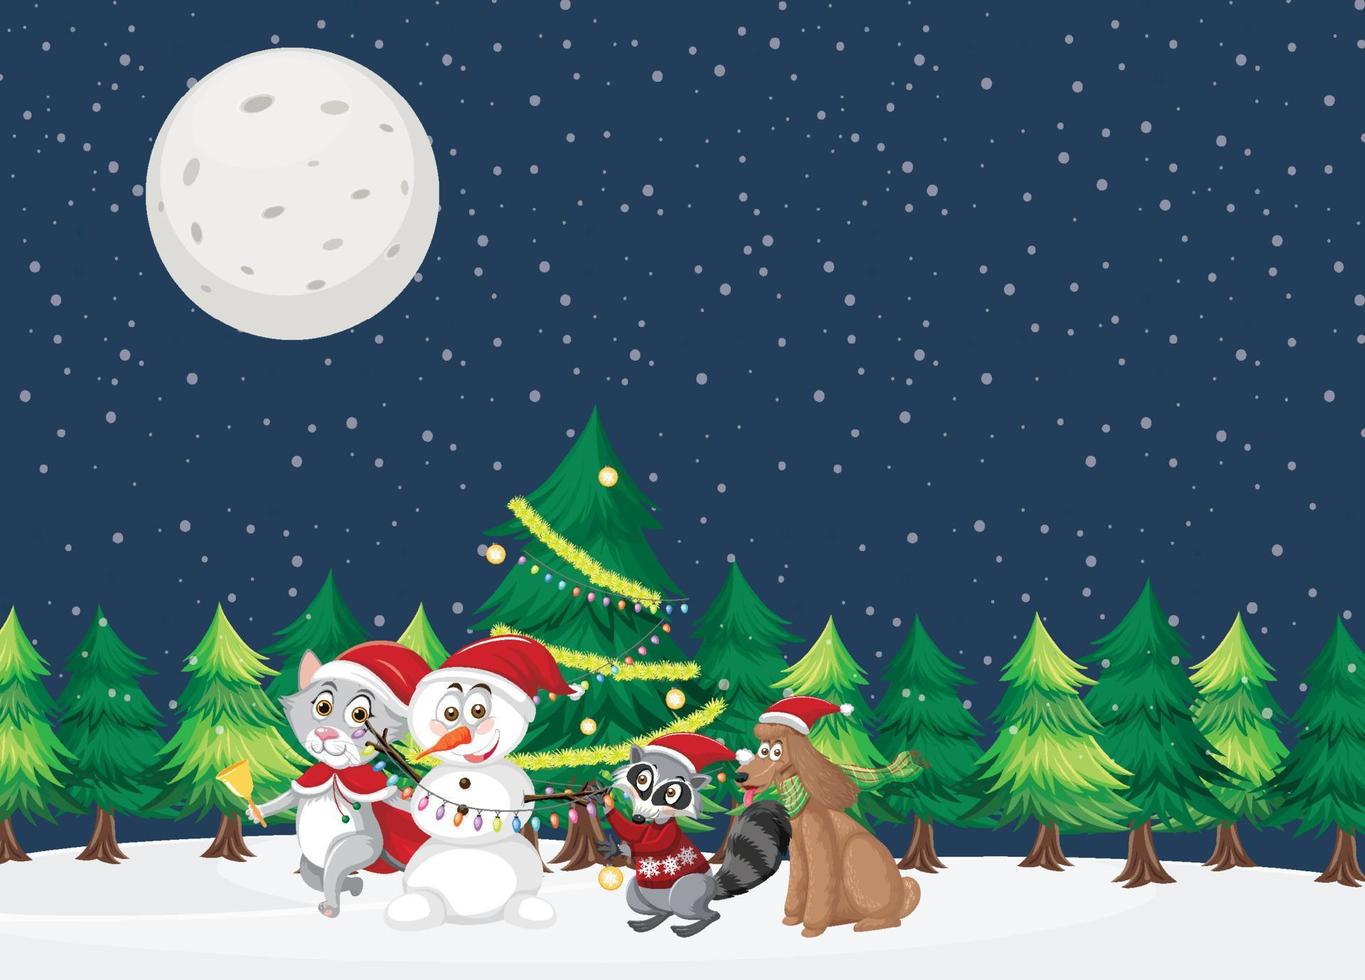 Christmas theme with Snoman and animals vector